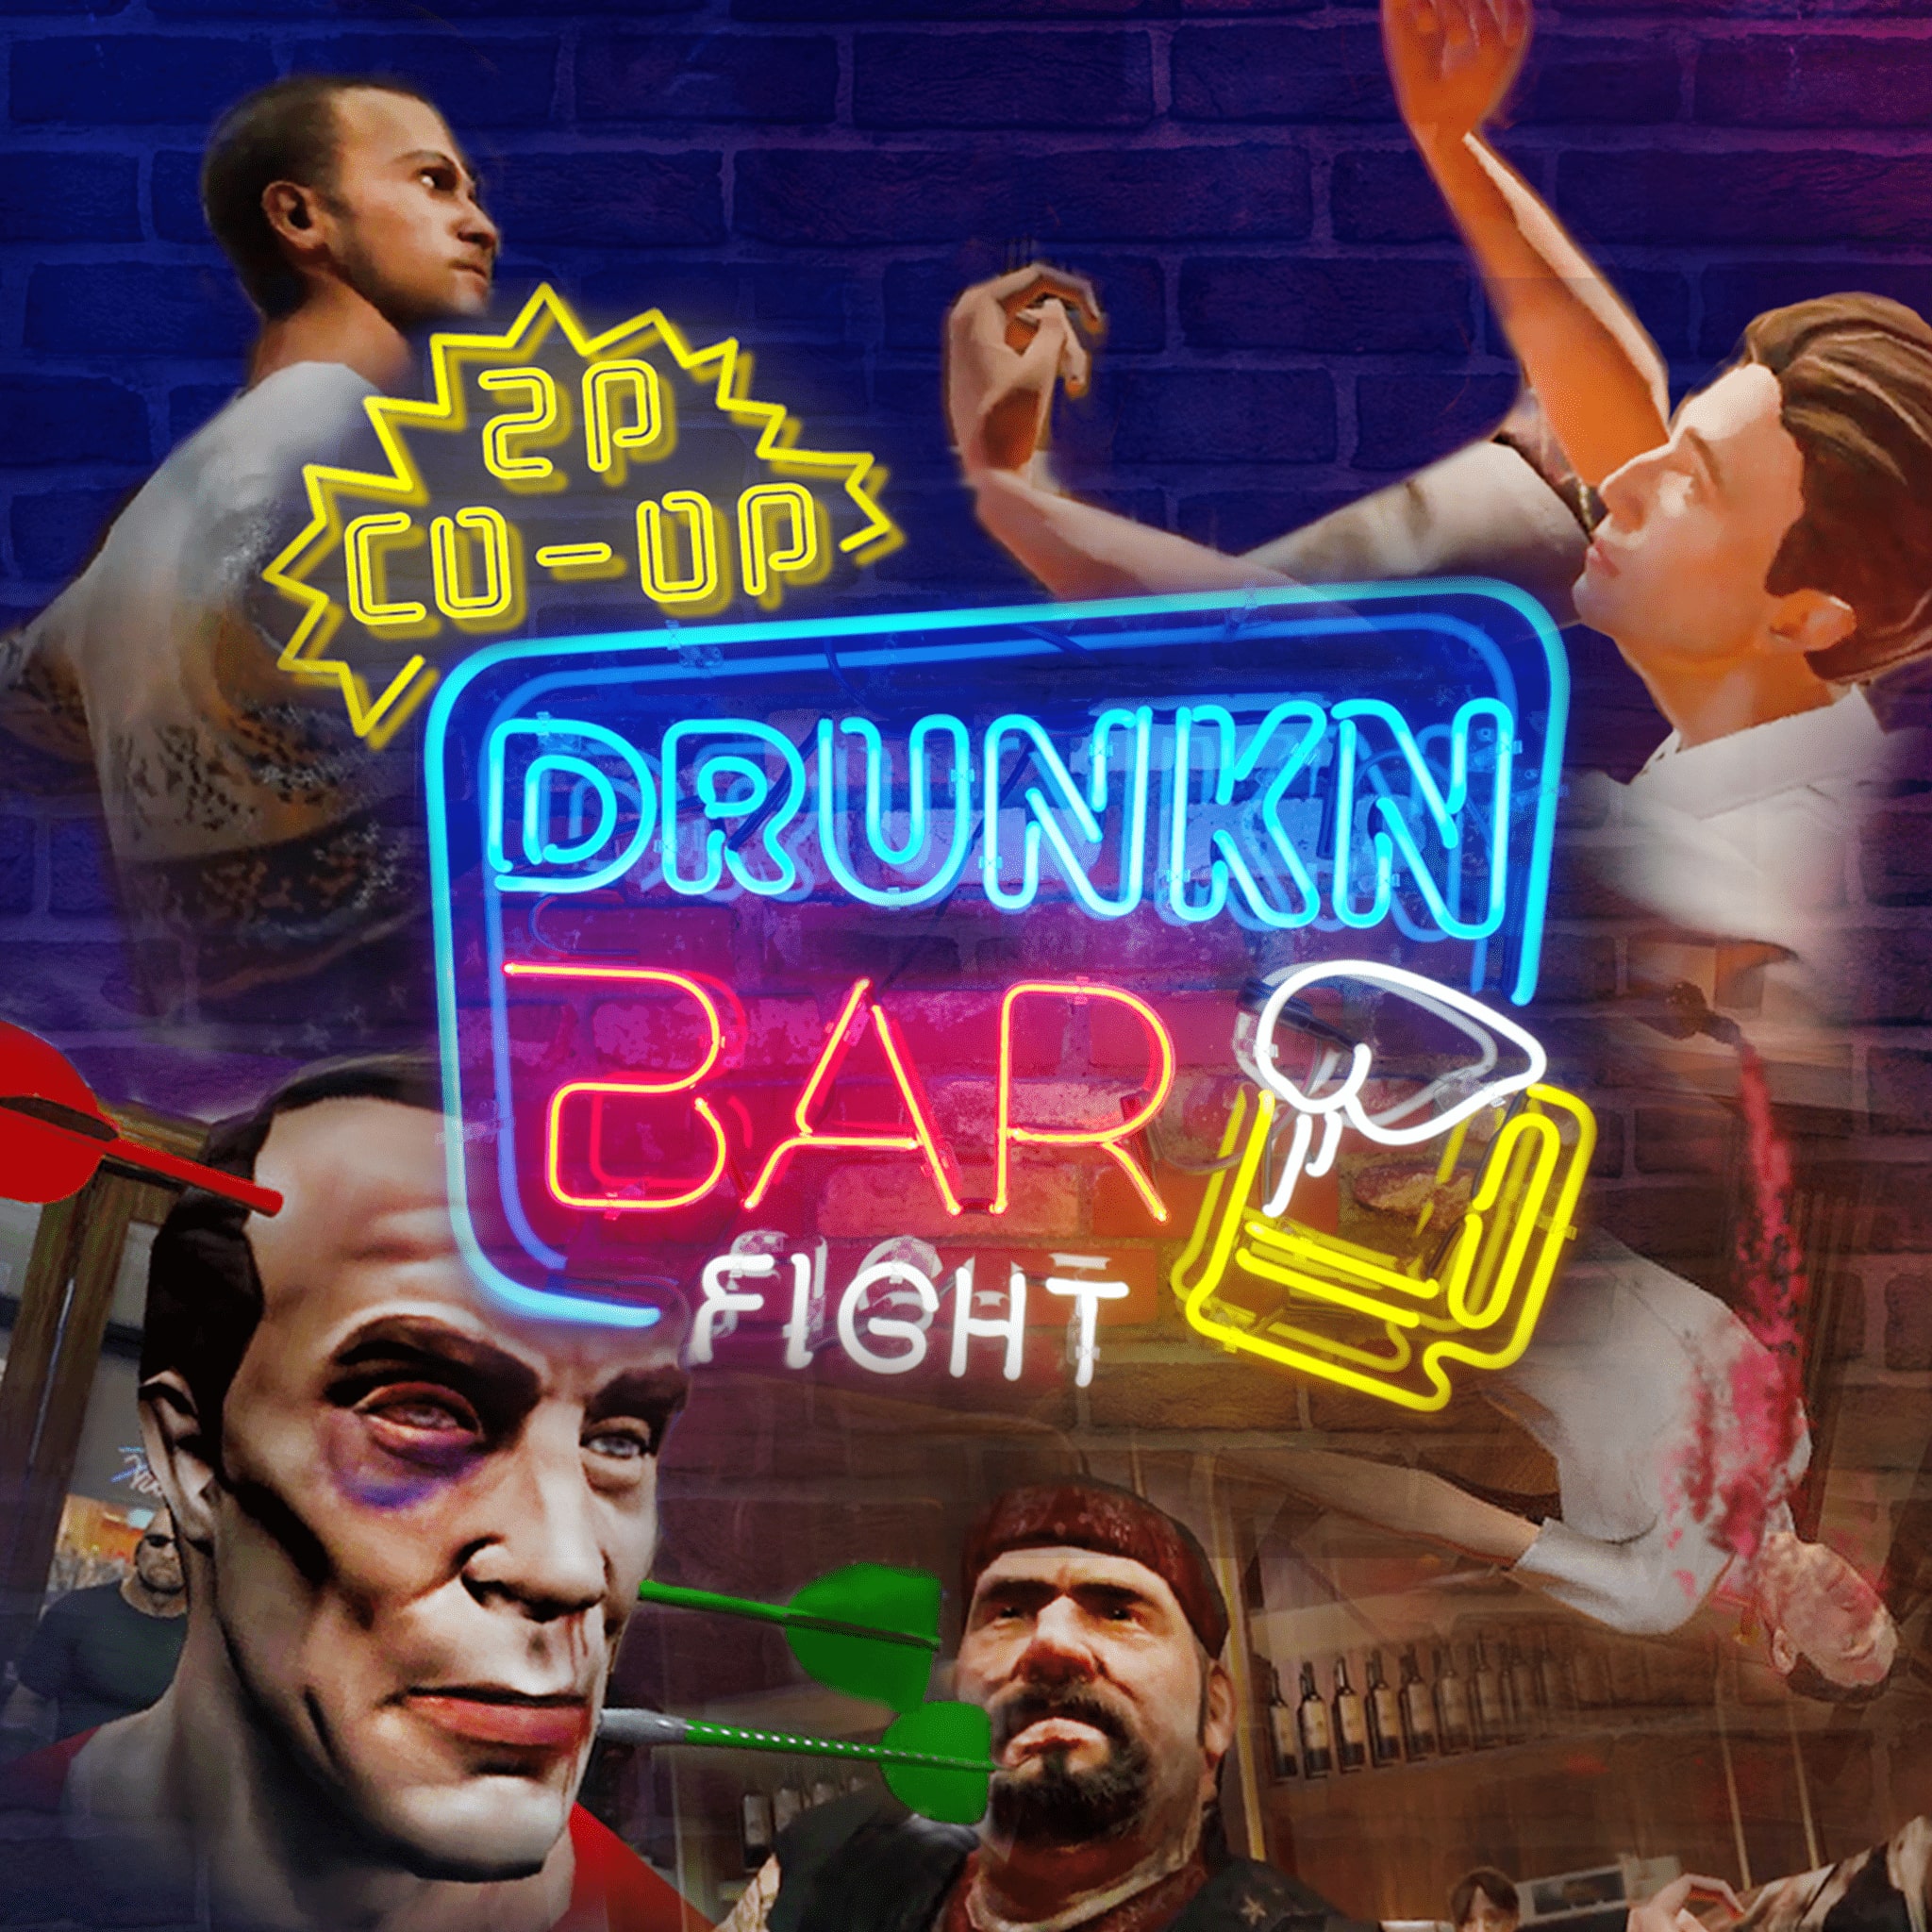 drunkn bar fight controls ps4